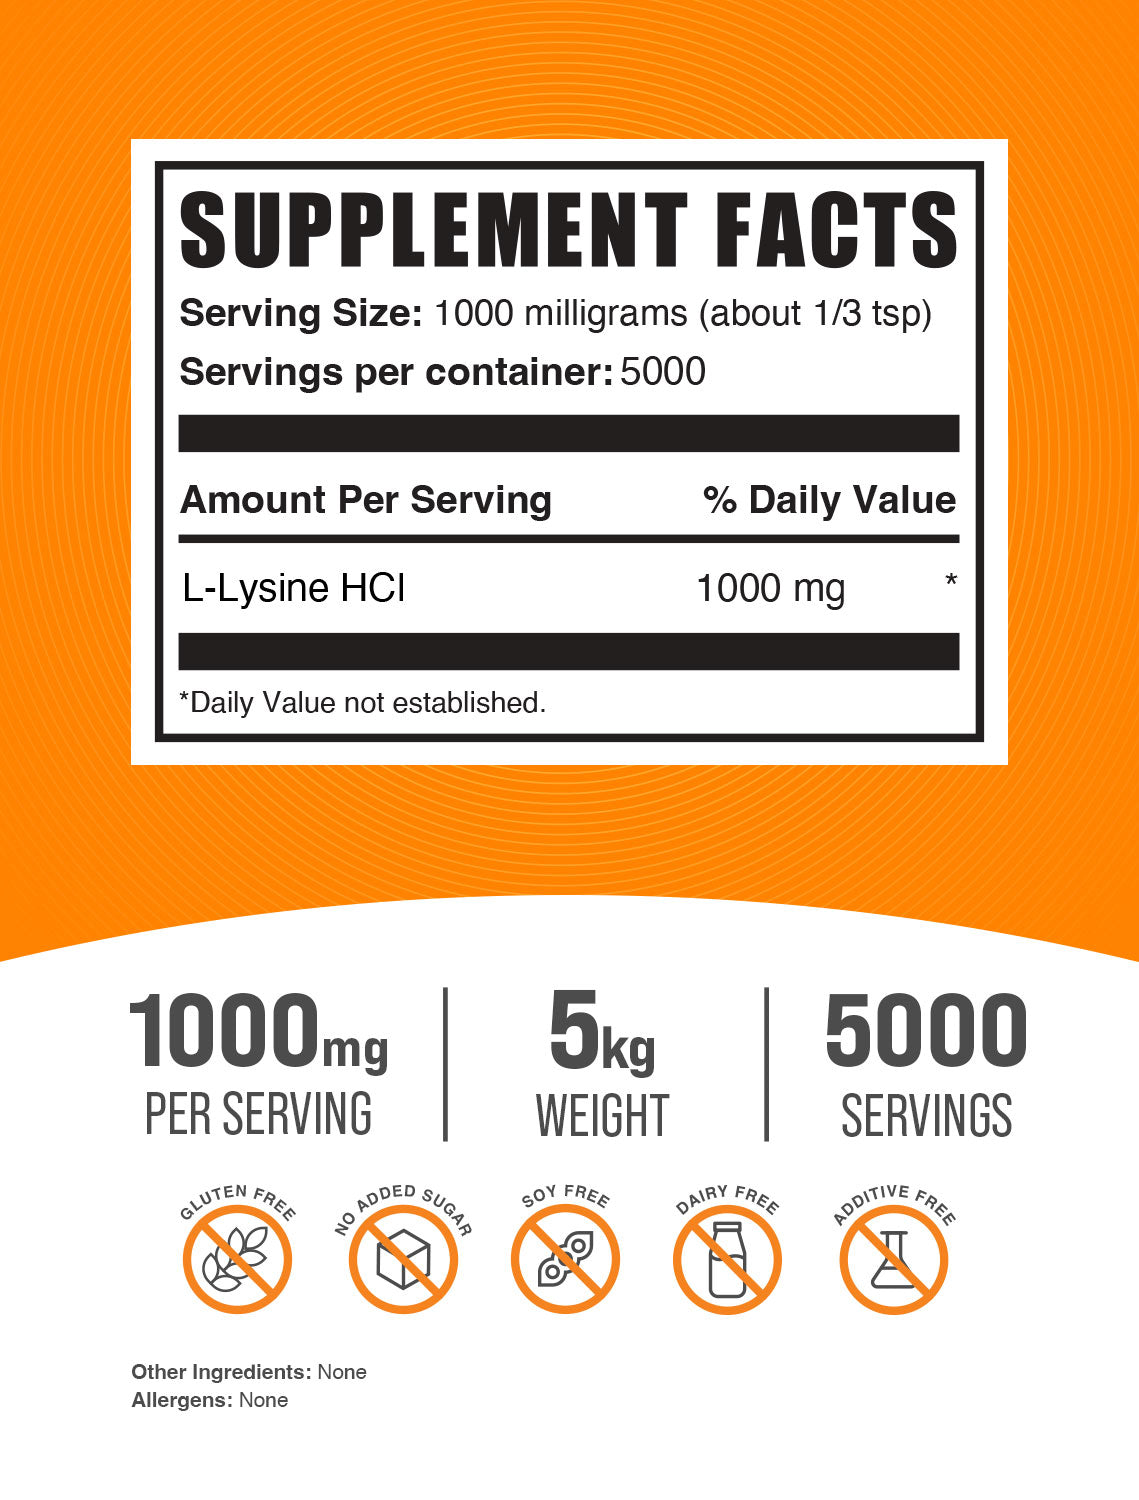 L-Lysine HCl powder 1kg keywords image